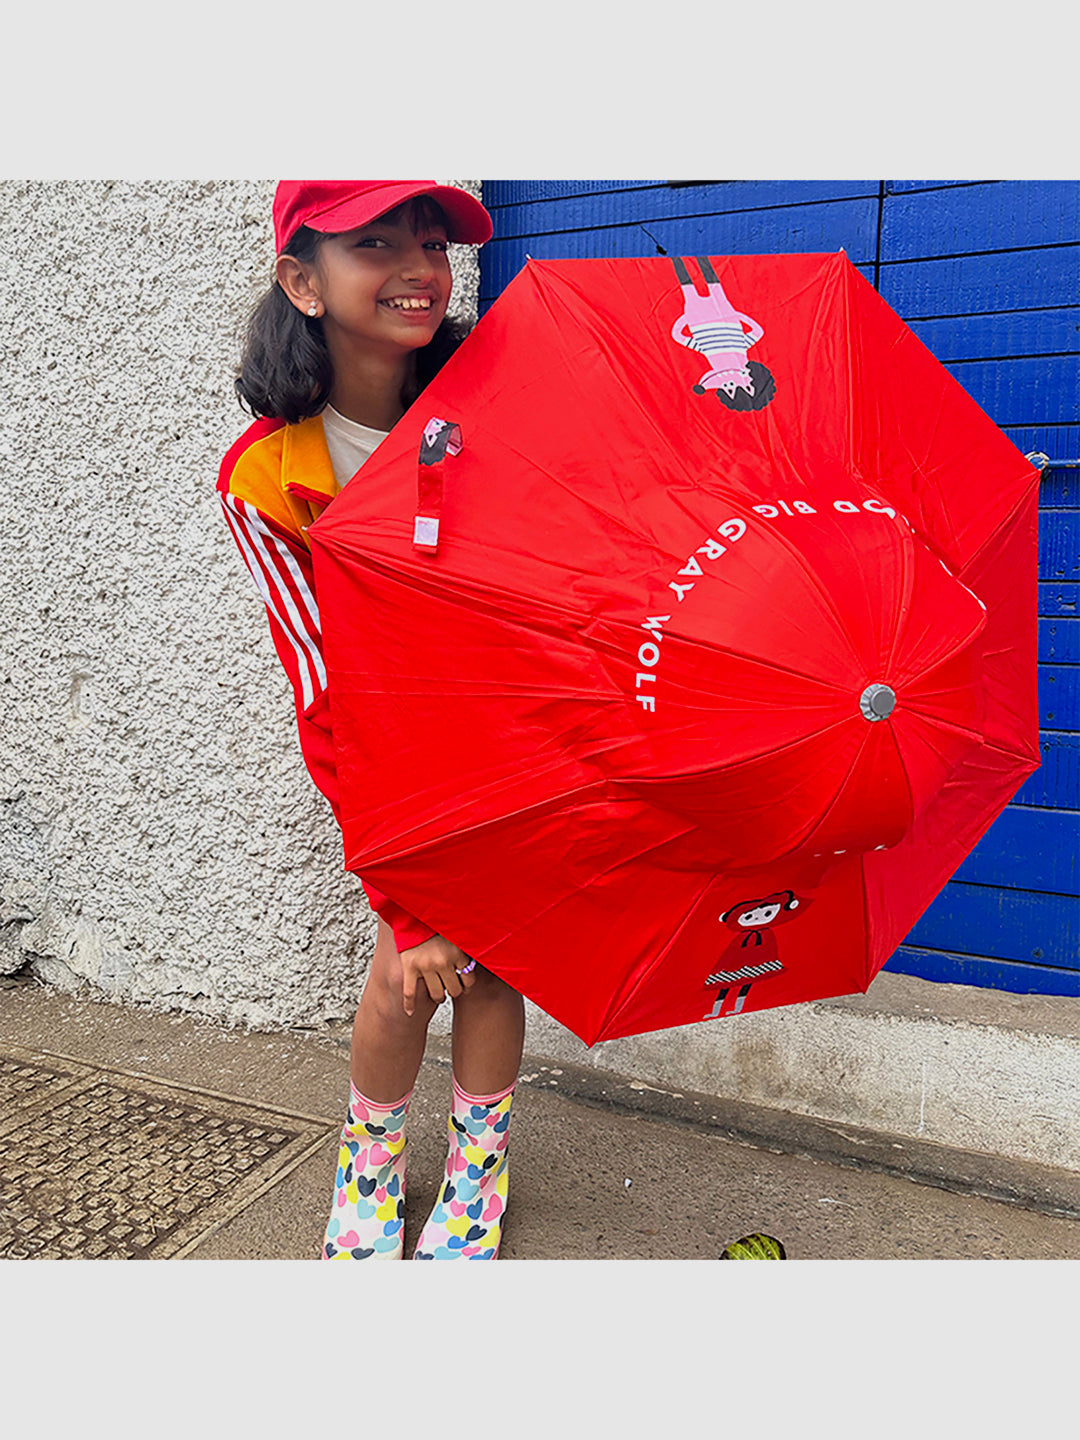 Little Surprise Box Unique Spanish Patio Style Kids Umbrella - LSB-UM-Patio-Ridinghoodred